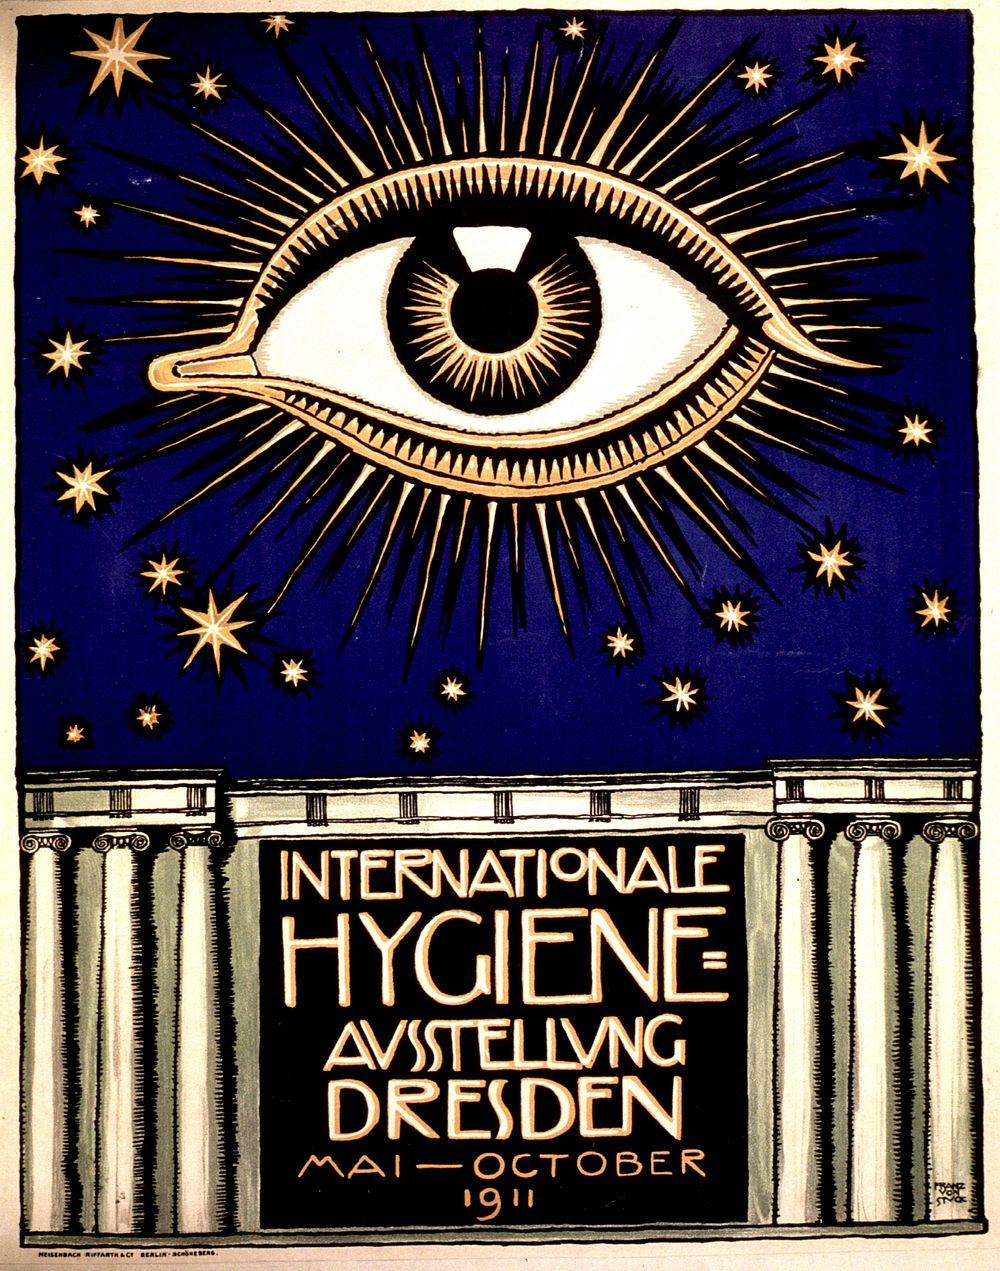 Internationale Hygiene-Ausstellung. Visual motif: An eye surrounded by stars. Columns frame the text. Original public domain…